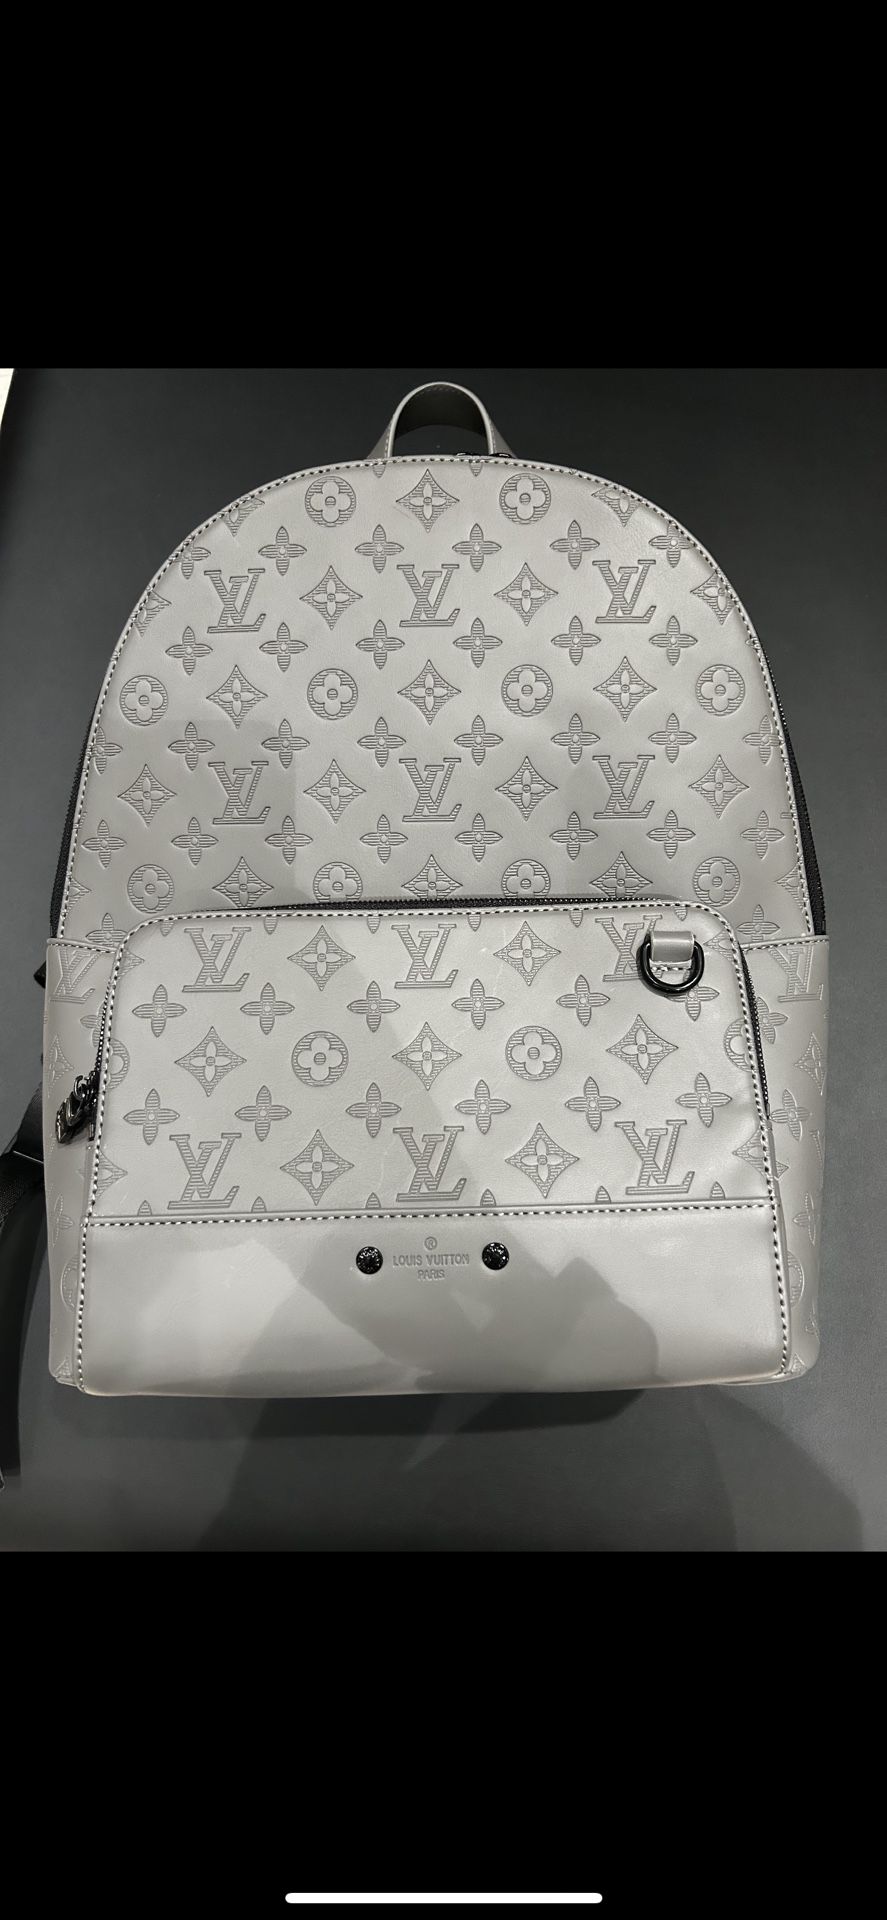 Louis Vuitton backpack 